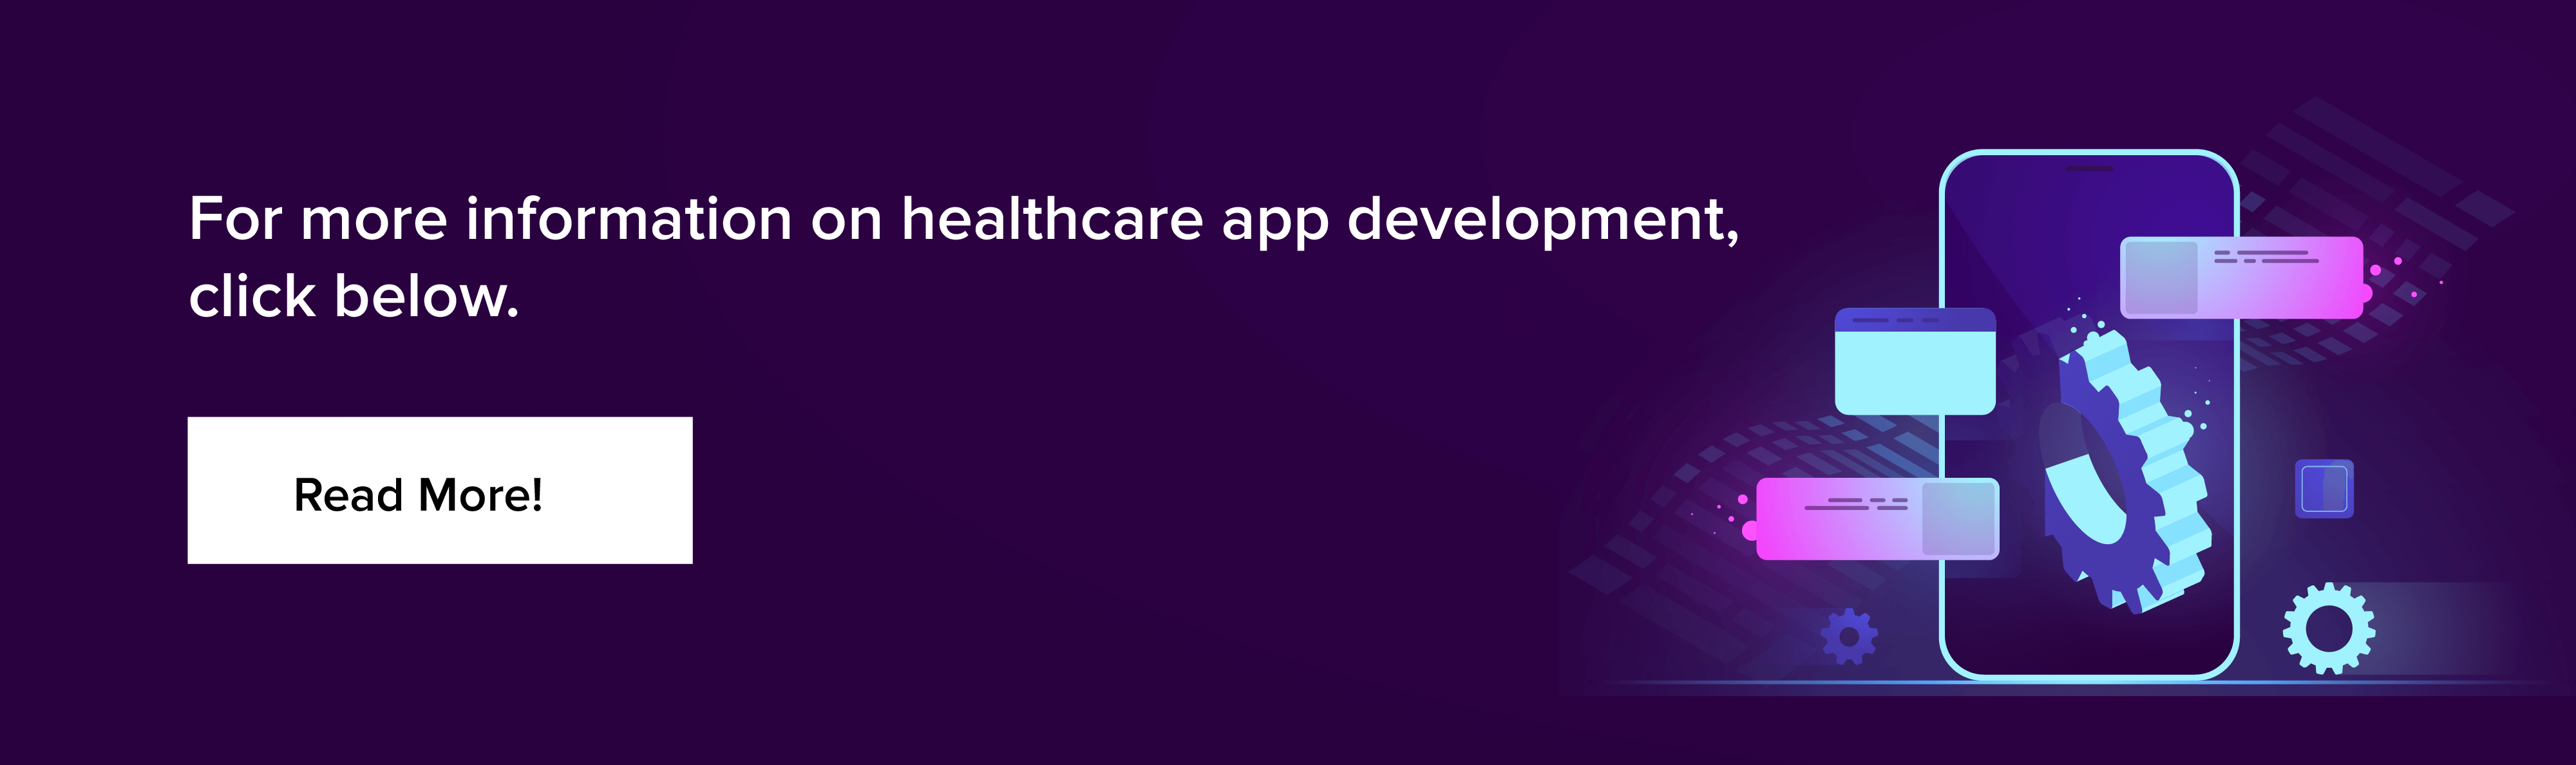 read more on healthcare app development